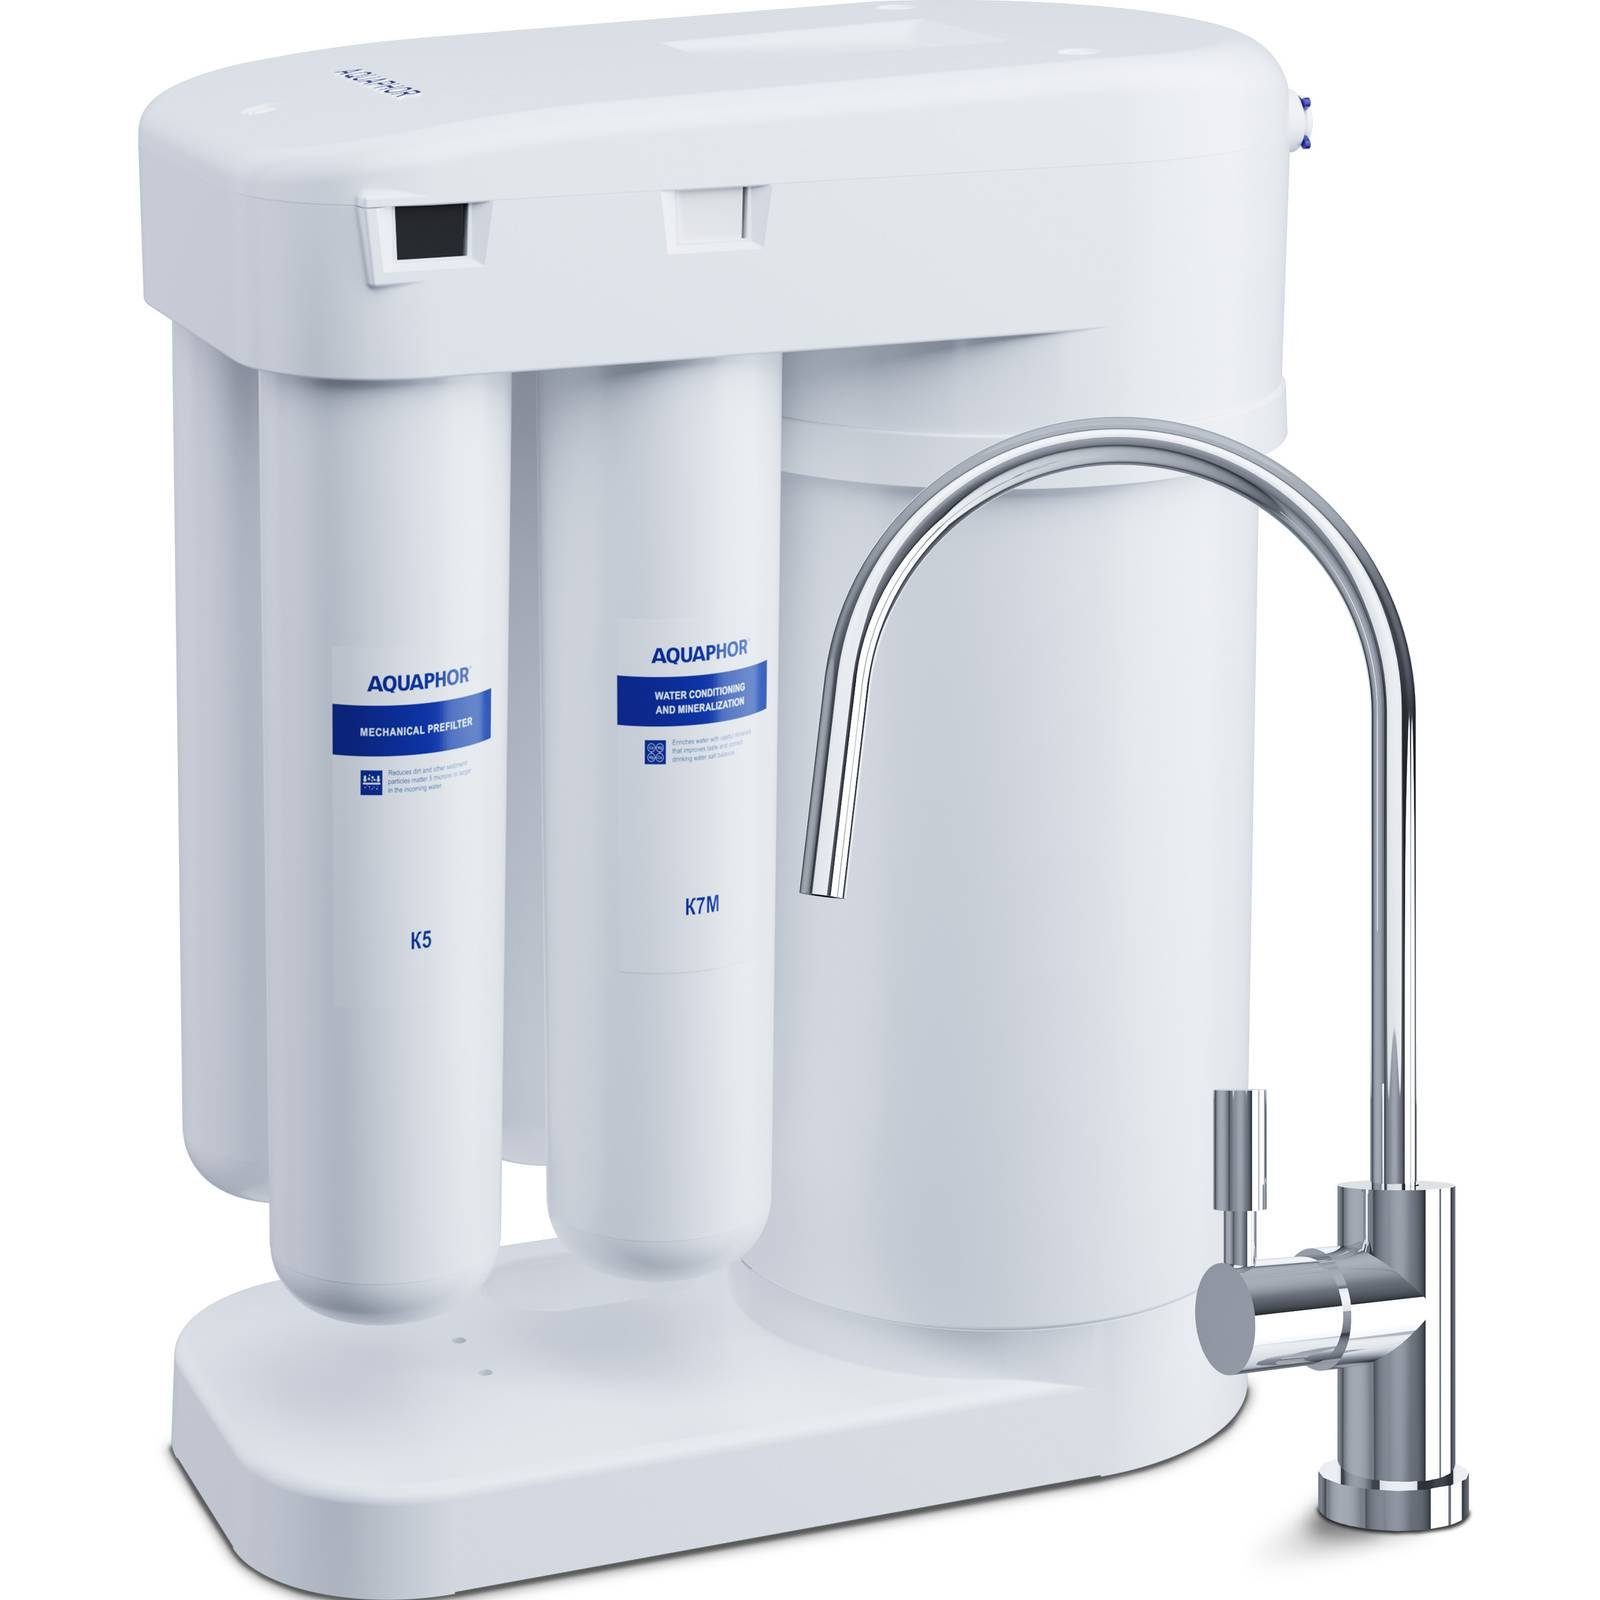 AQUAPHOR Wasserfilter Umkehrosmoseanlage Wasserfilter Wasserenthärtung Osmose Anlage